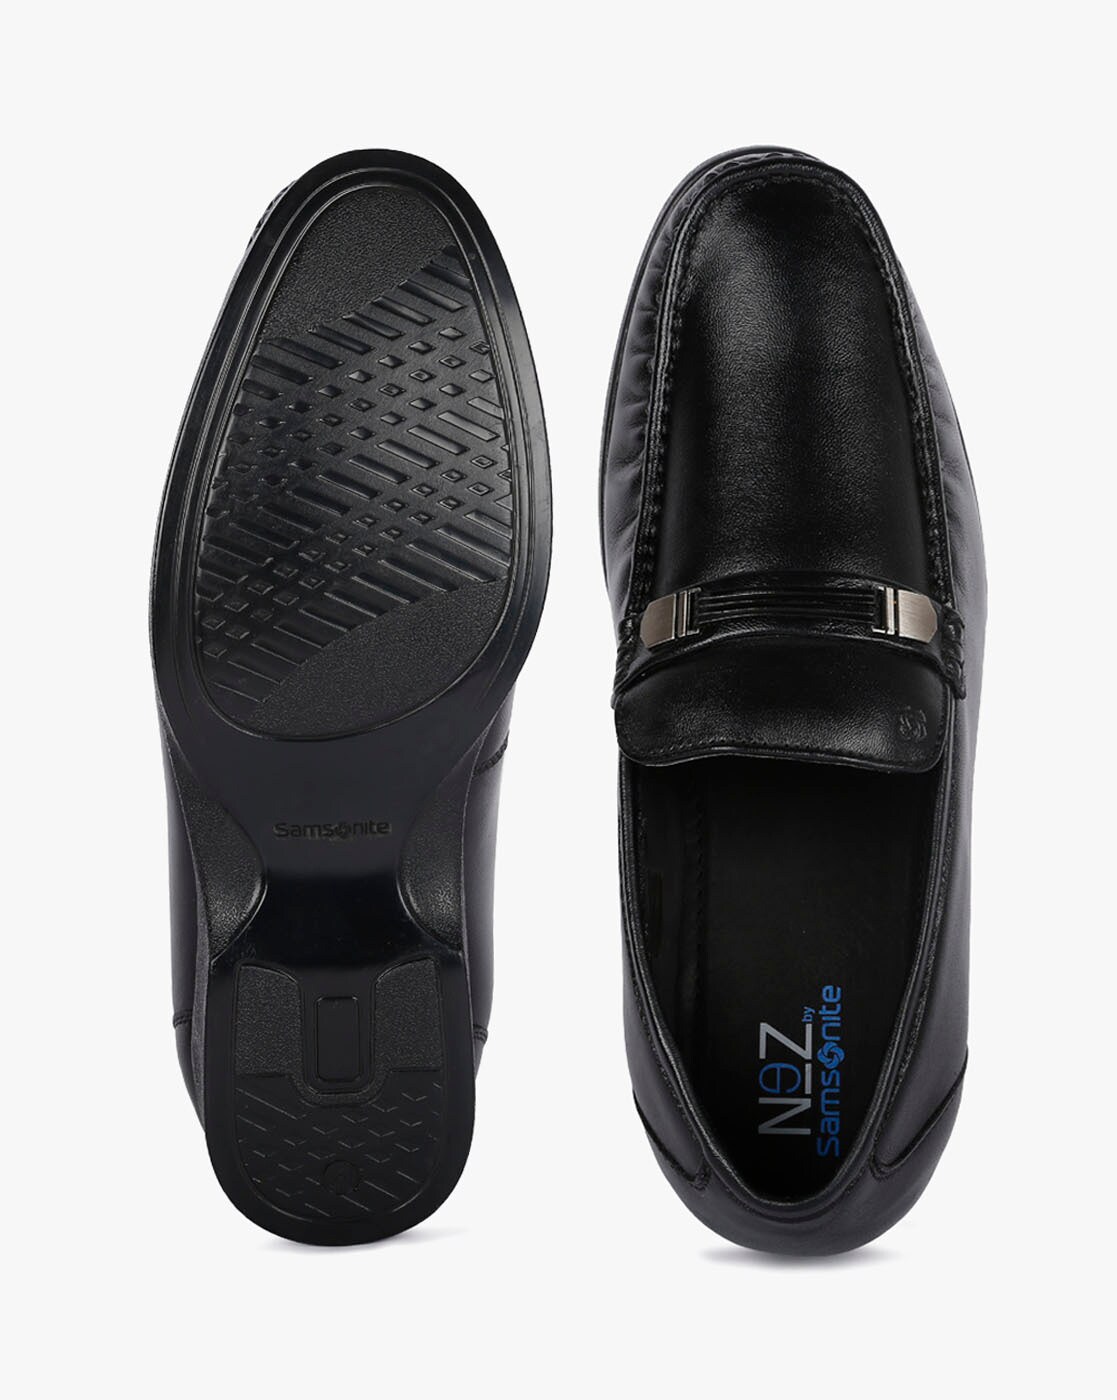 Nez by Samsonite Lace Up Shoes For Men - Buy Tan Color Nez by Samsonite  Lace Up Shoes For Men Online at Best Price - Shop Online for Footwears in  India | Flipkart.com